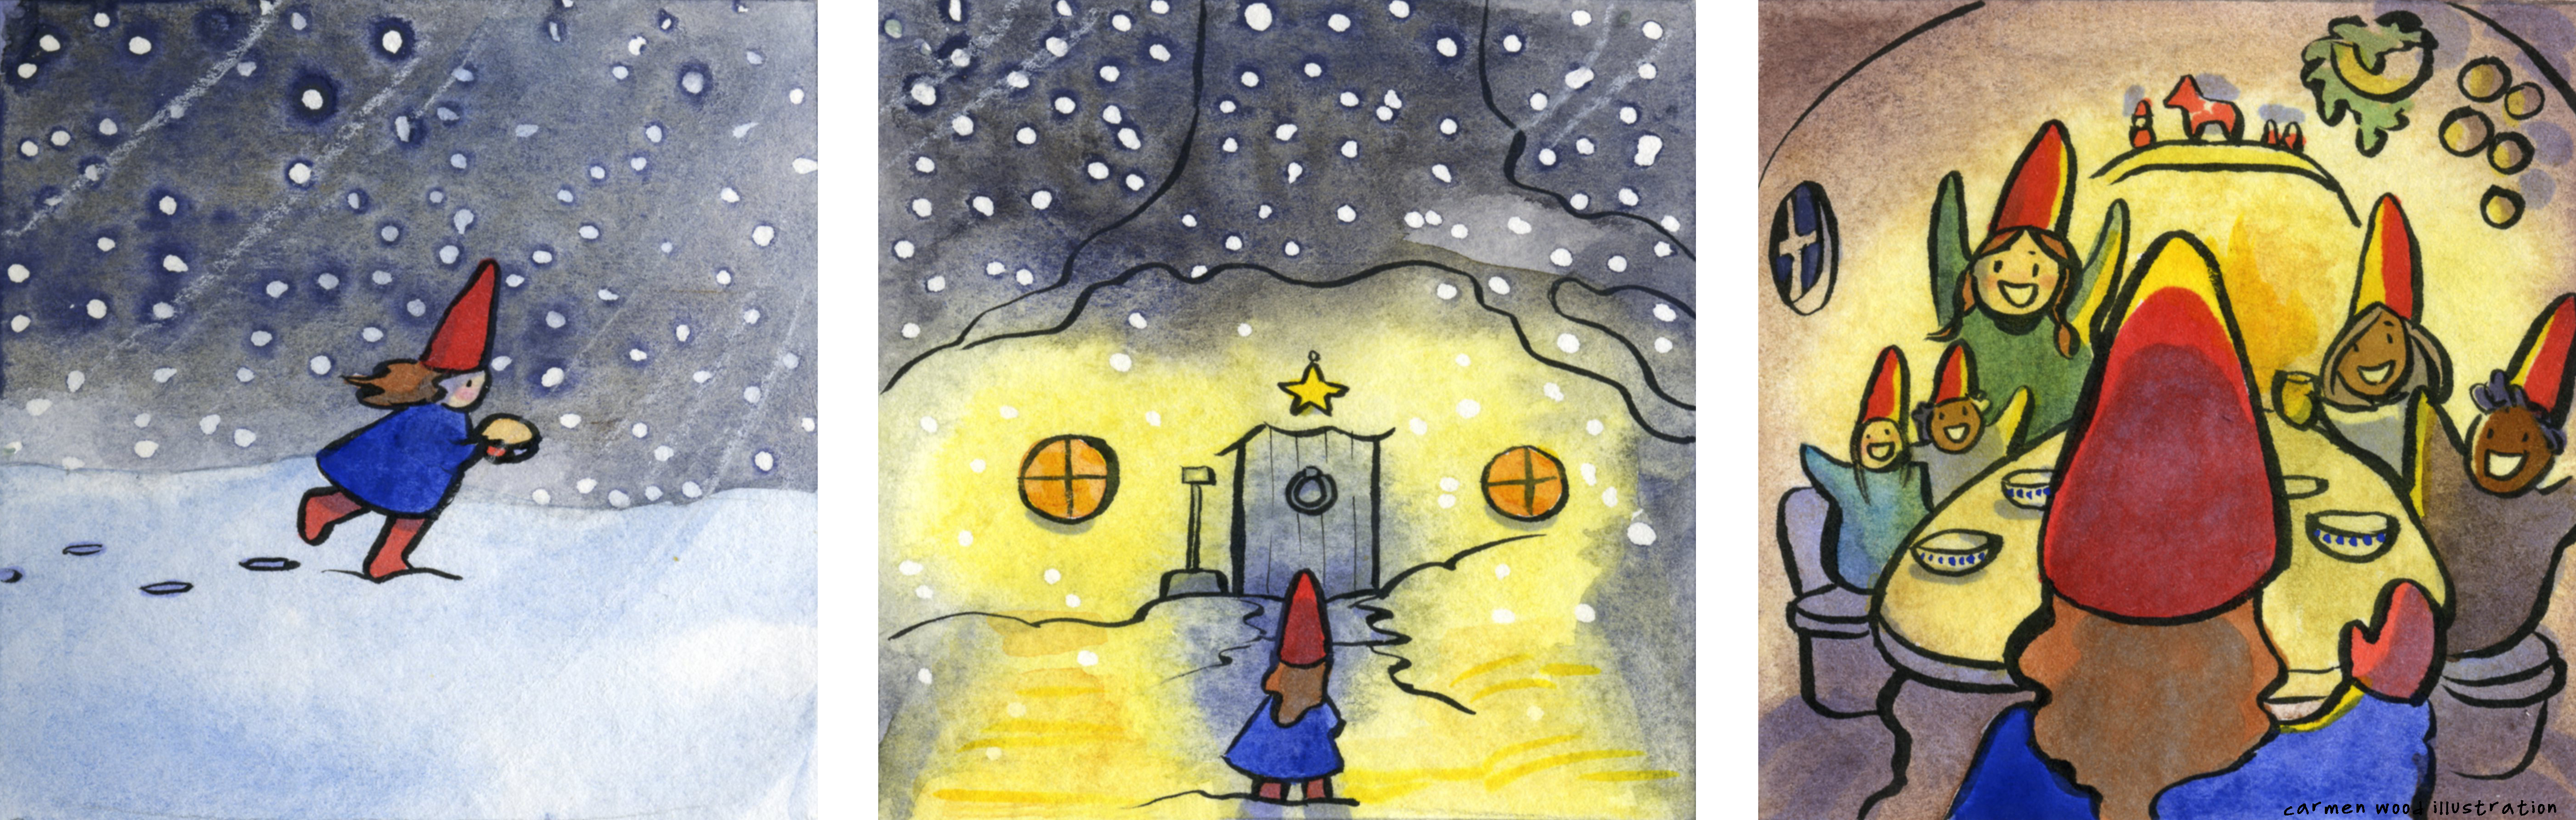 Small gnome trudges through the snow with a pie to a gnome party! Carmen Wood Illustration comic art graphic novel children's illustration illustrator fantasy art webcomic fantasy magic lbgtquia+ kidlit artist